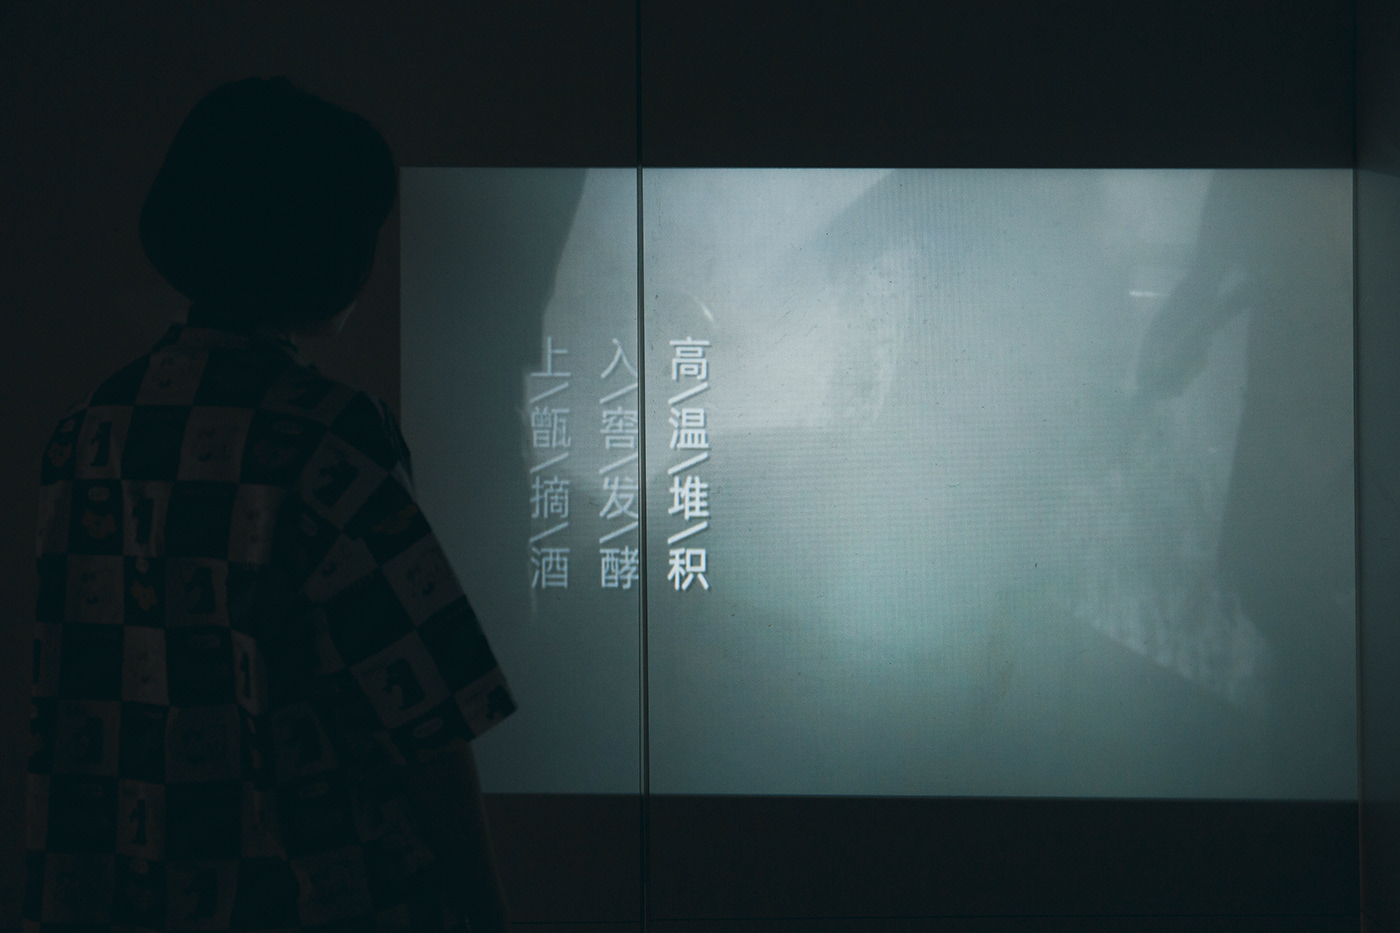 chinese baijiu design Exhibition  five senses visualization 中国白酒 五感體驗 展覽 策展設計 視覺設計